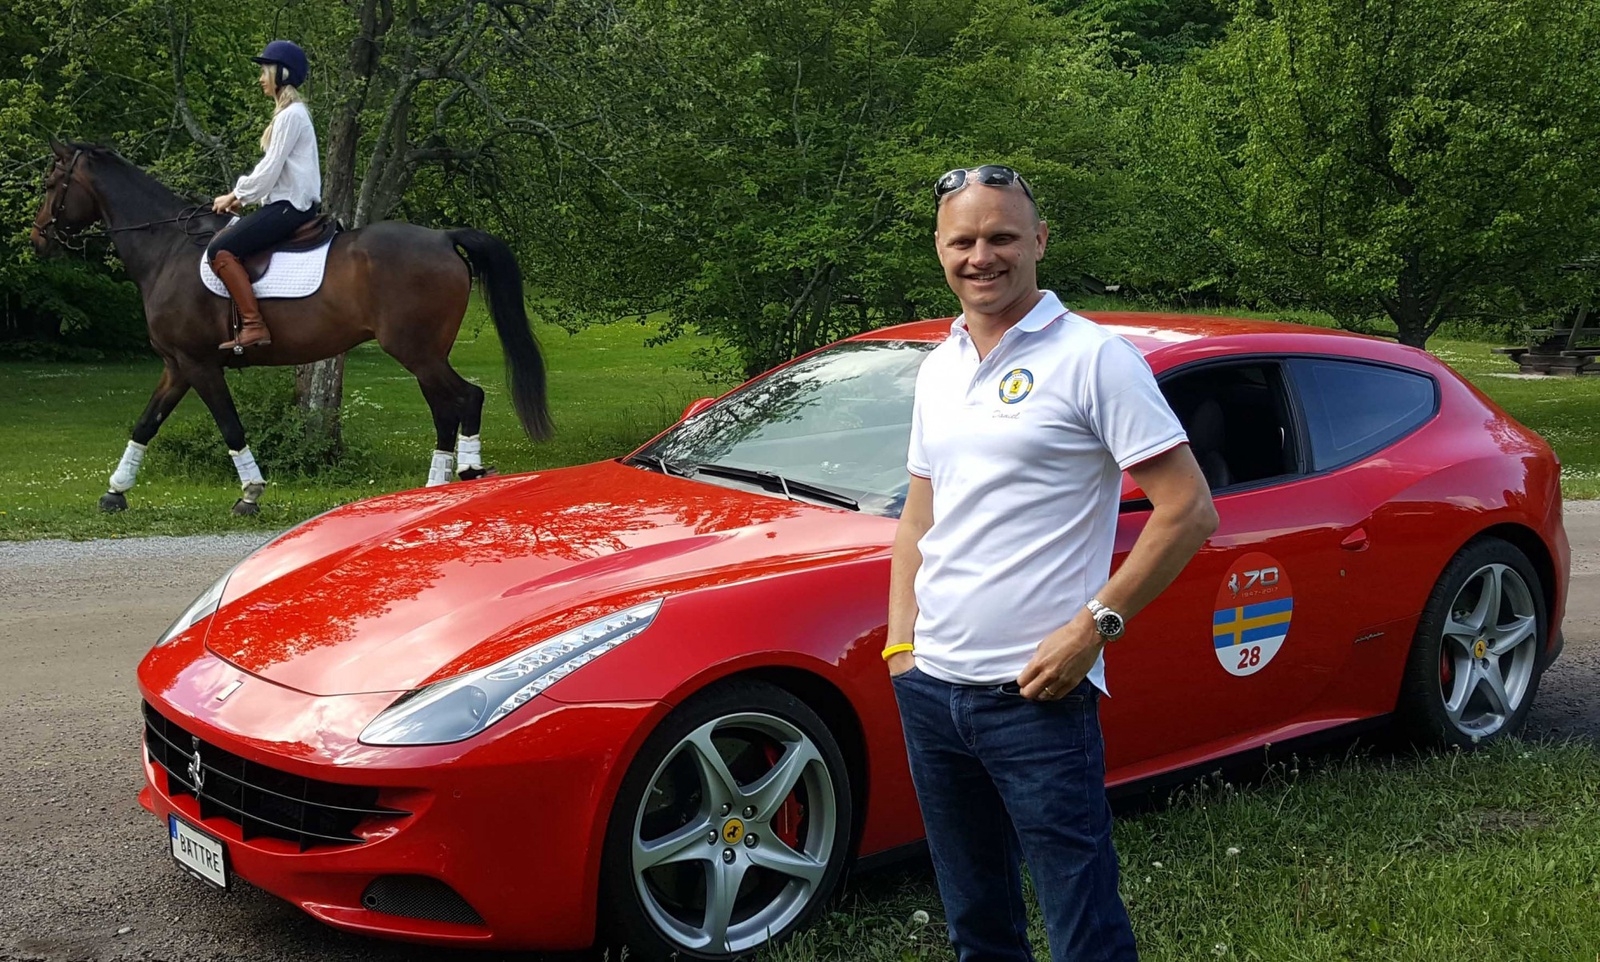 Daniel Siitam, ordförande i Ferrari Club Sweden, kör en Ferrari SS från 2012.
Foto: Privat